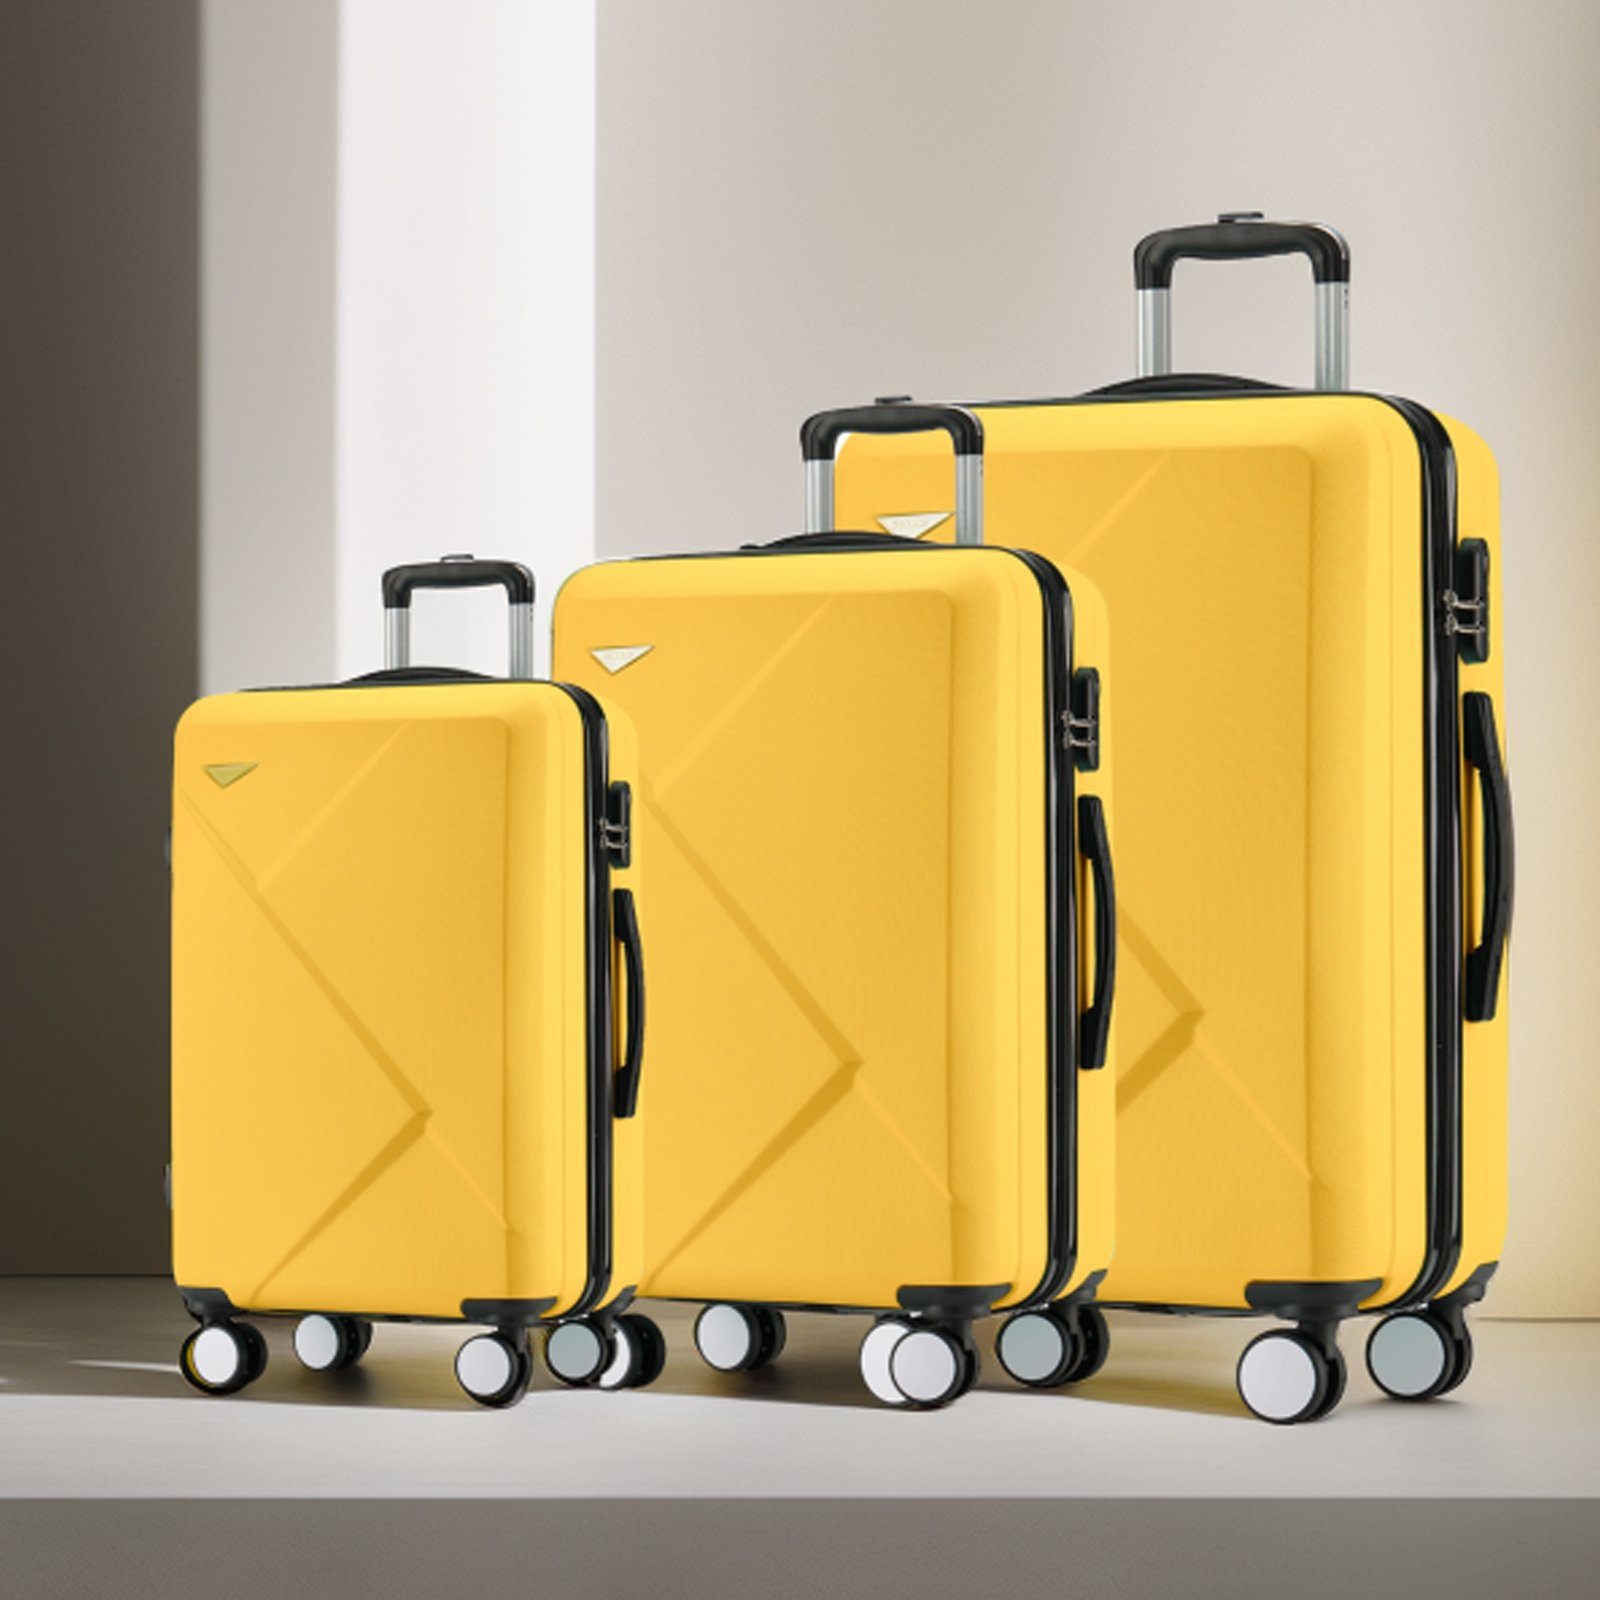 FUROKOY Kofferset 3-teiliges Set, Hartschalen-Handgepäck ABS-Material, , Rollkoffer, Reisekoffer mit Zahlenschloss gelb